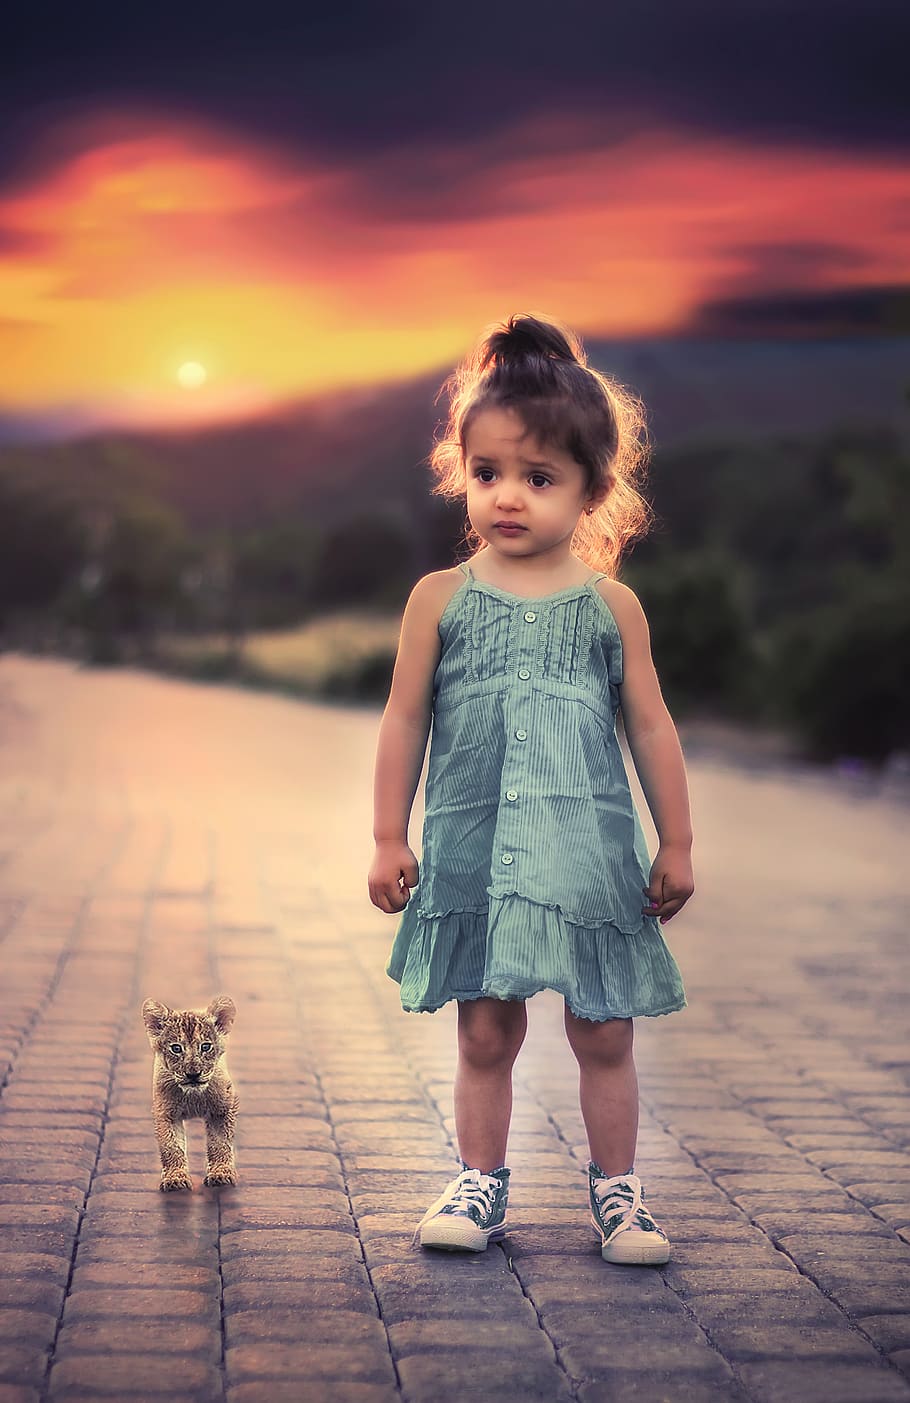 Toddler Girl Standing Beside Lion Cub, child, little, portrait